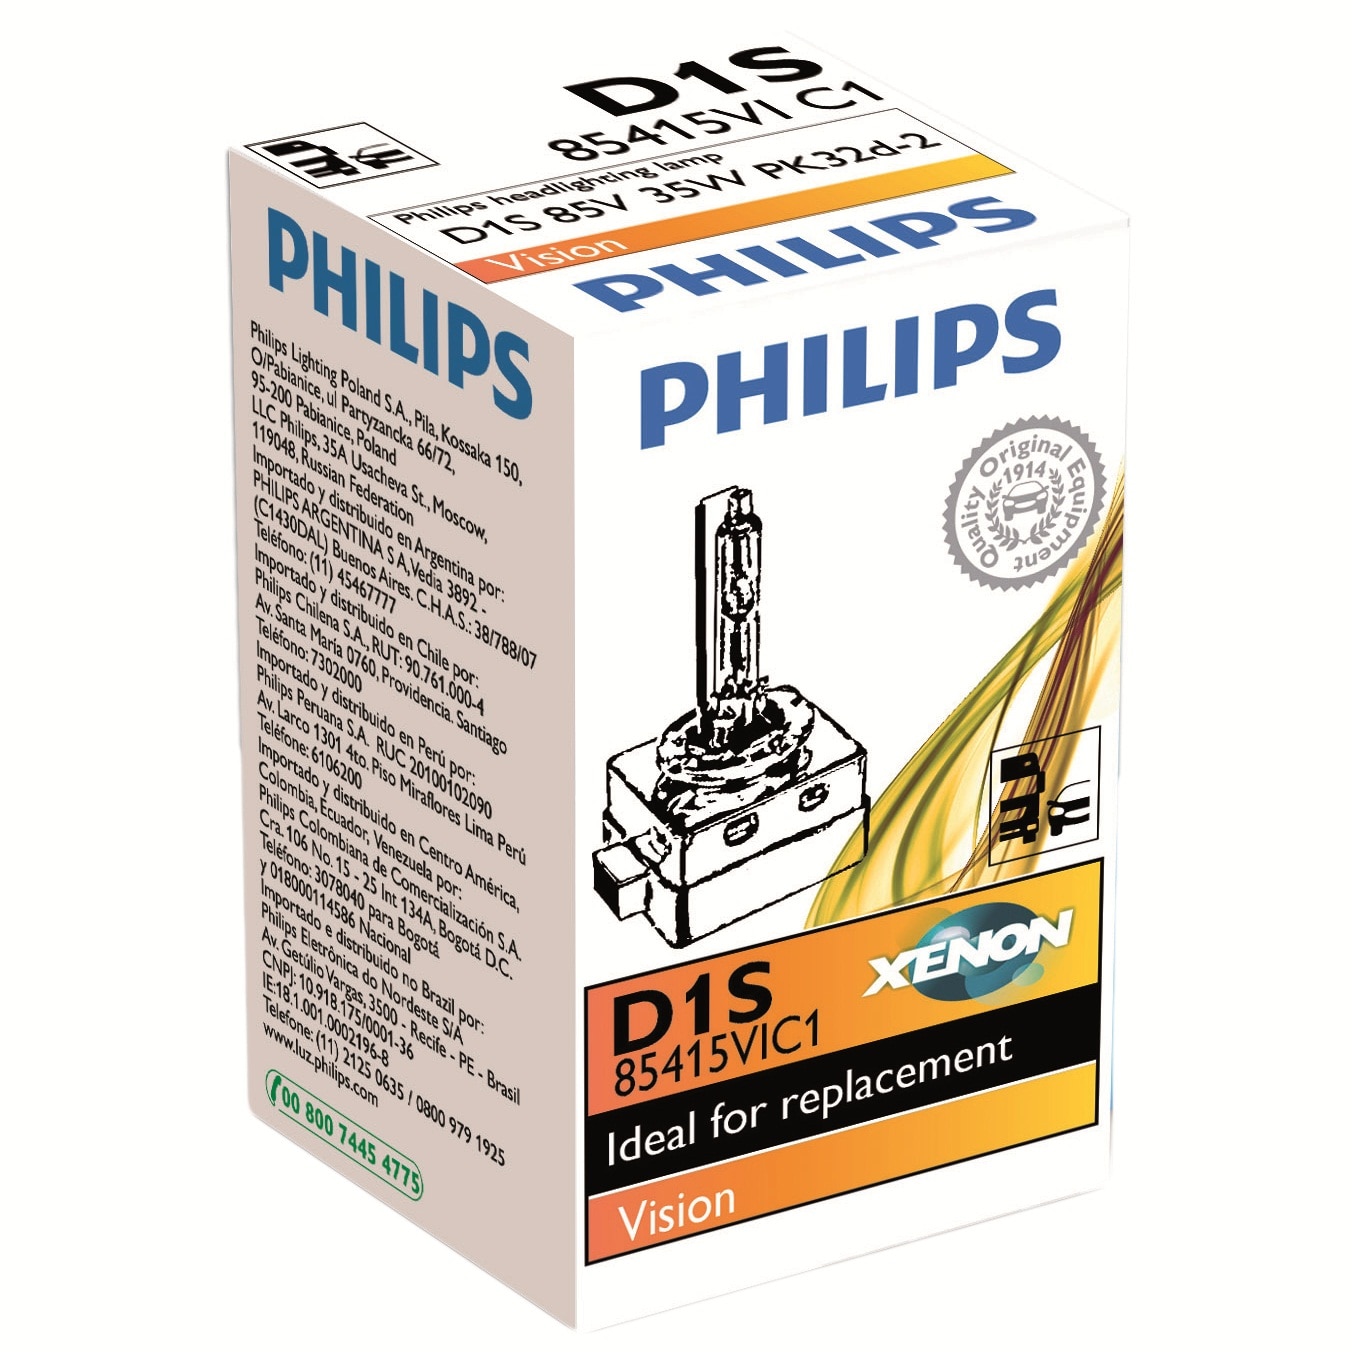 Philips Xenon Vision 85415 D1S 35W 85V - Hitta bästa pris på Prisjakt